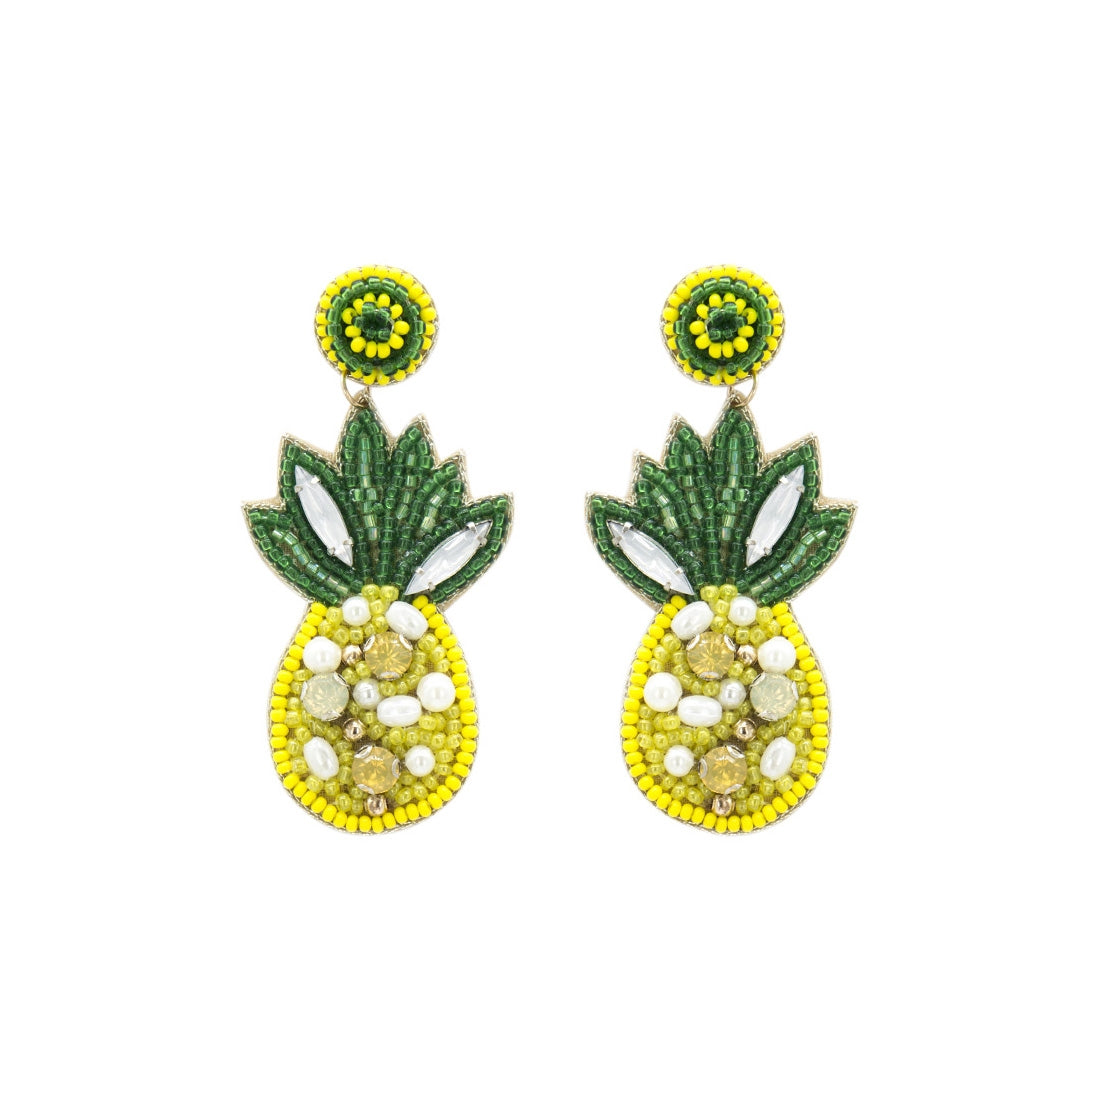 Pineapple Party Earrings